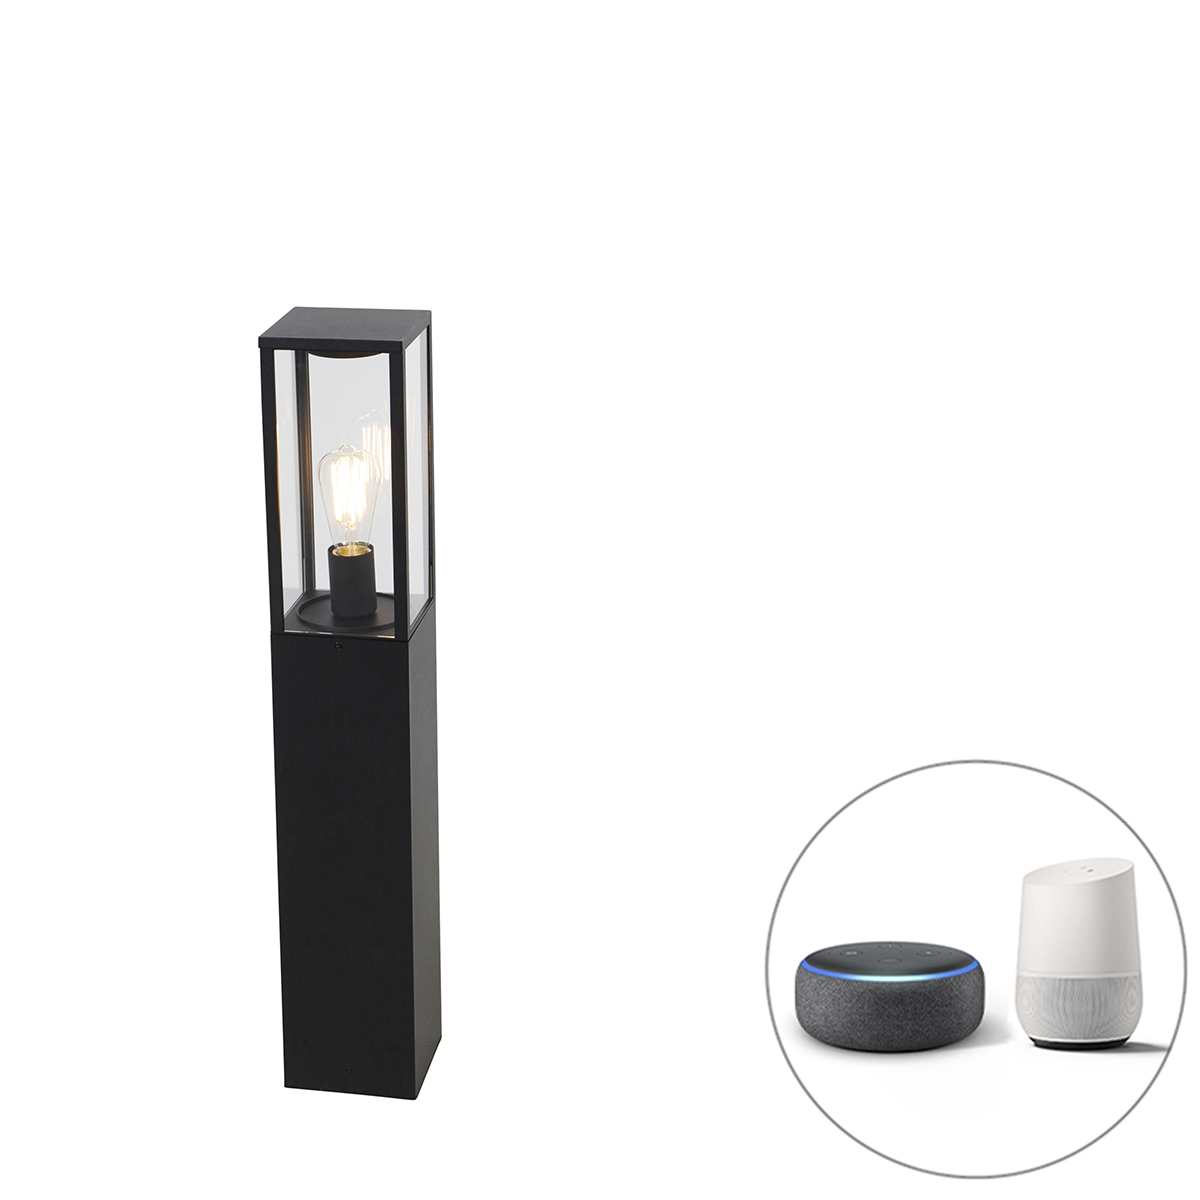 Smart stående utomhuslampa svart 80 cm inkl Wifi ST64 – Charlois